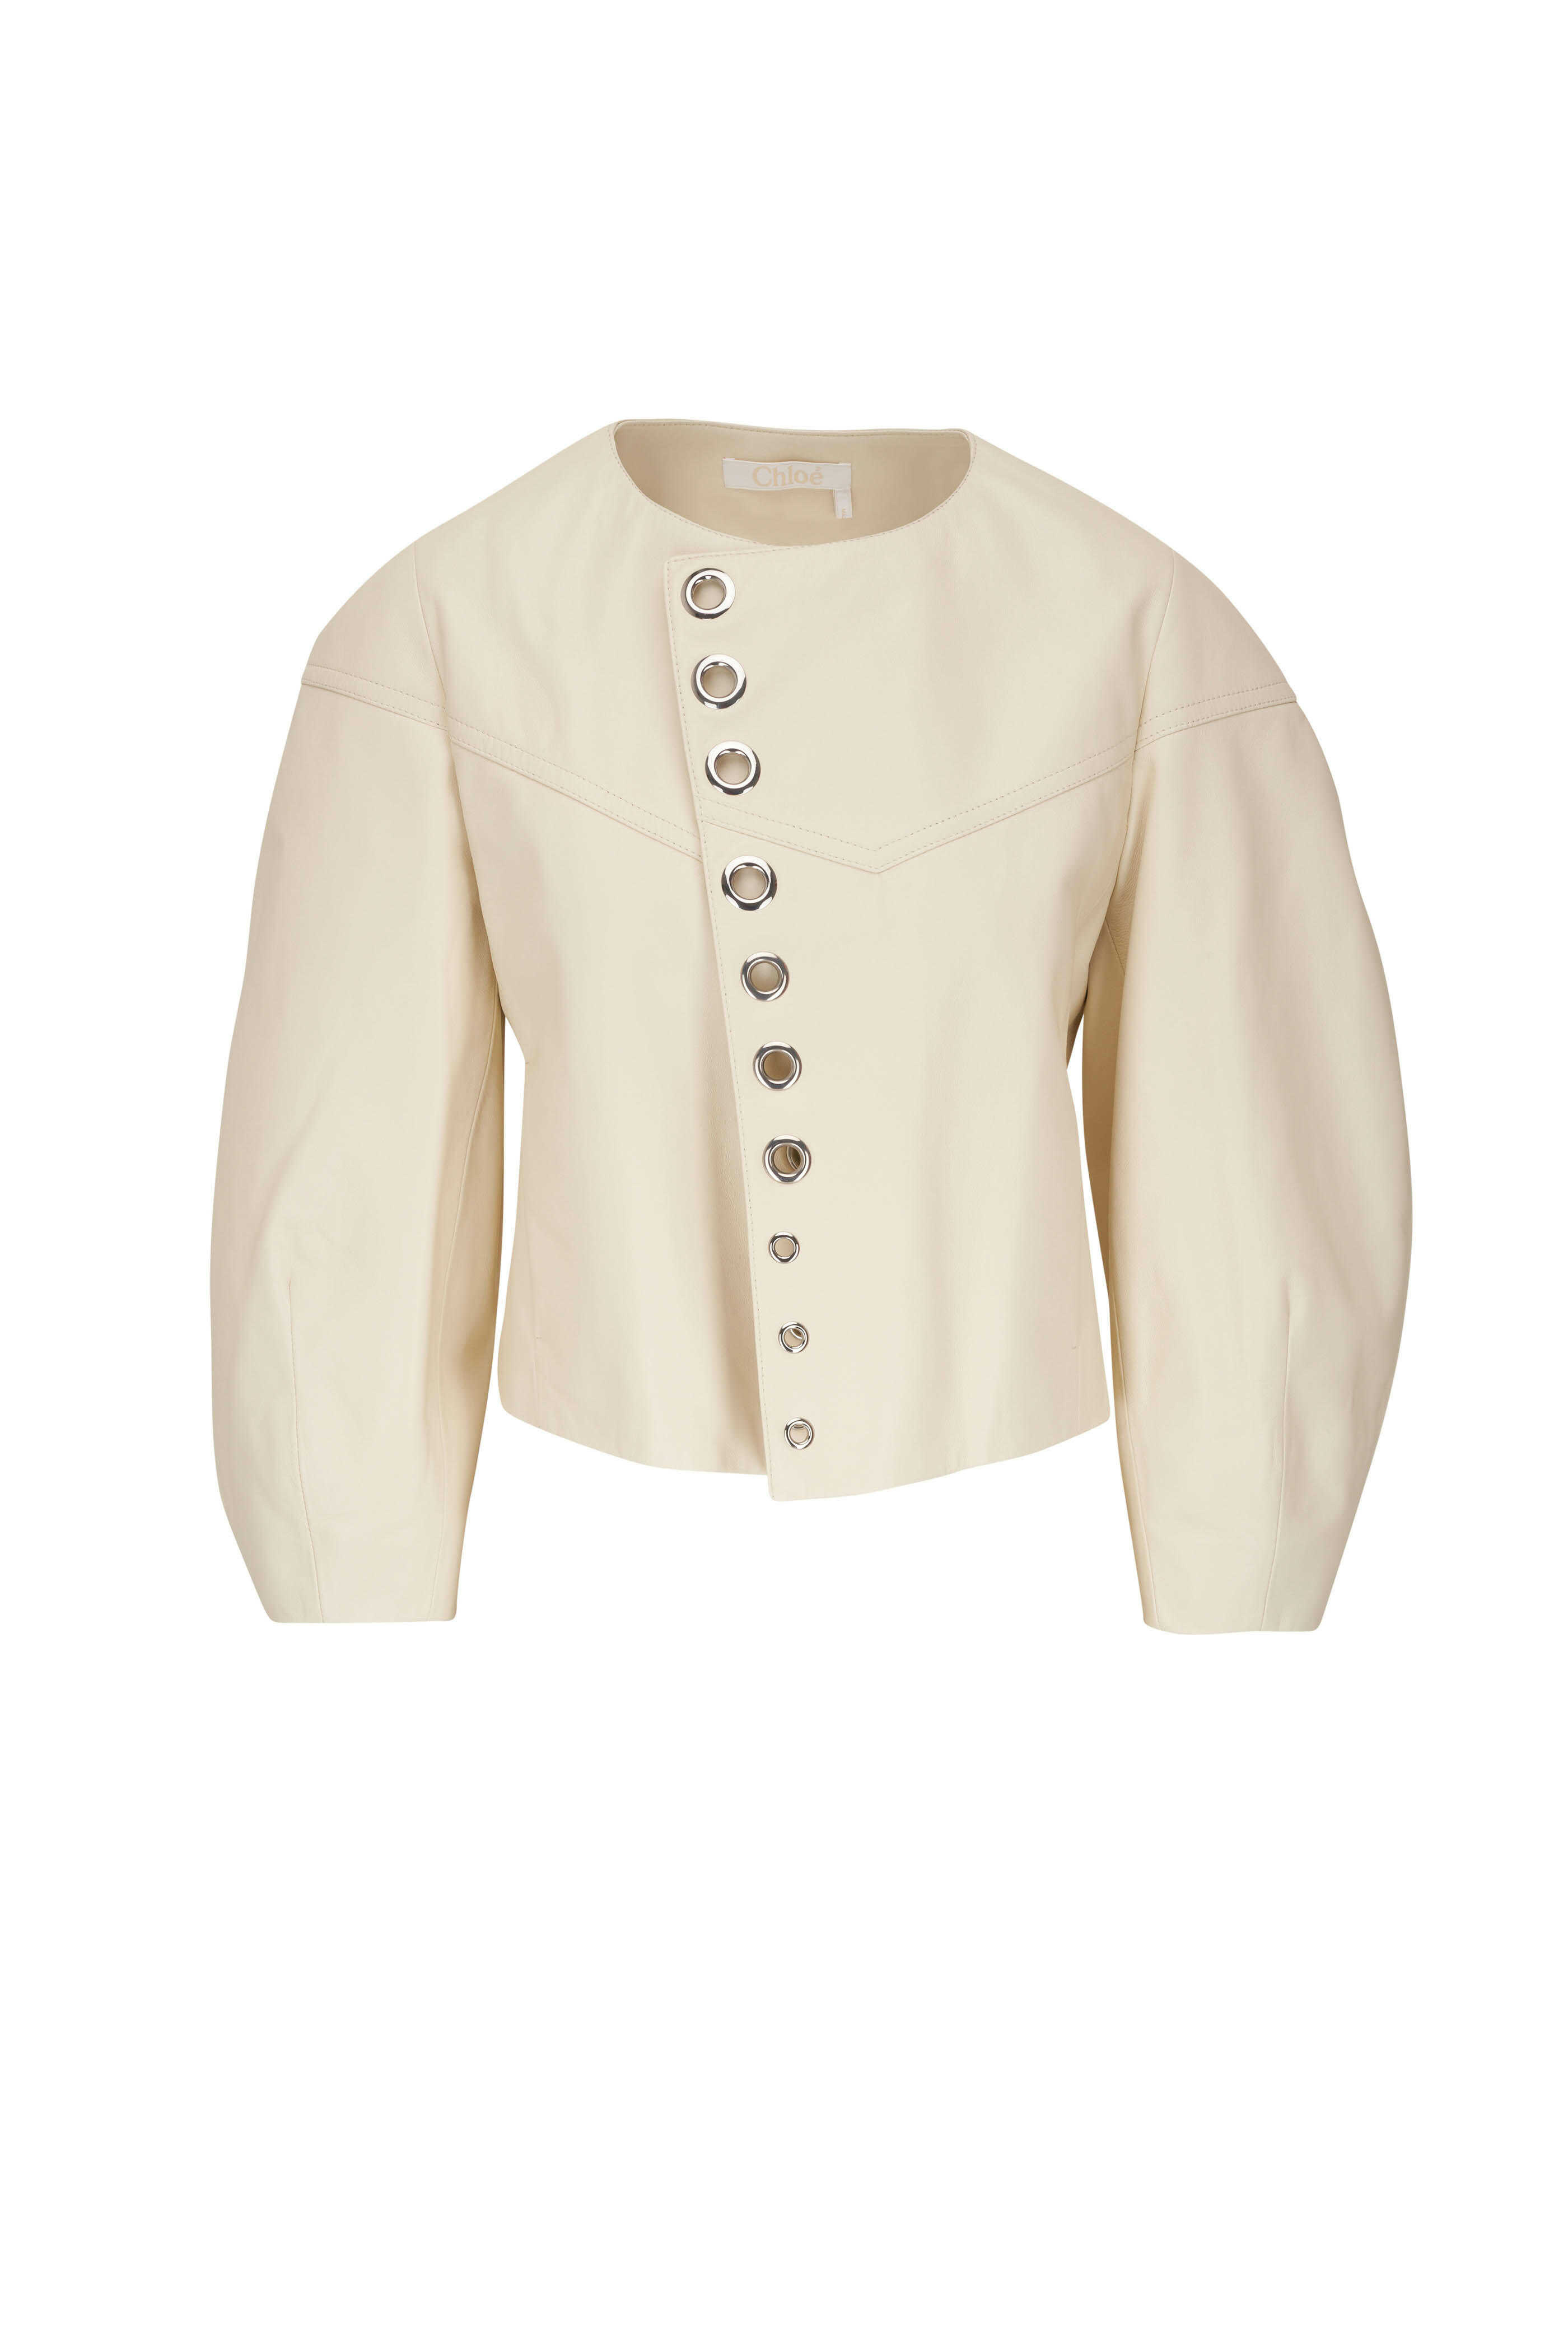 Chloé - Boxy Eden White Nappa Leather Jacket | Mitchell Stores